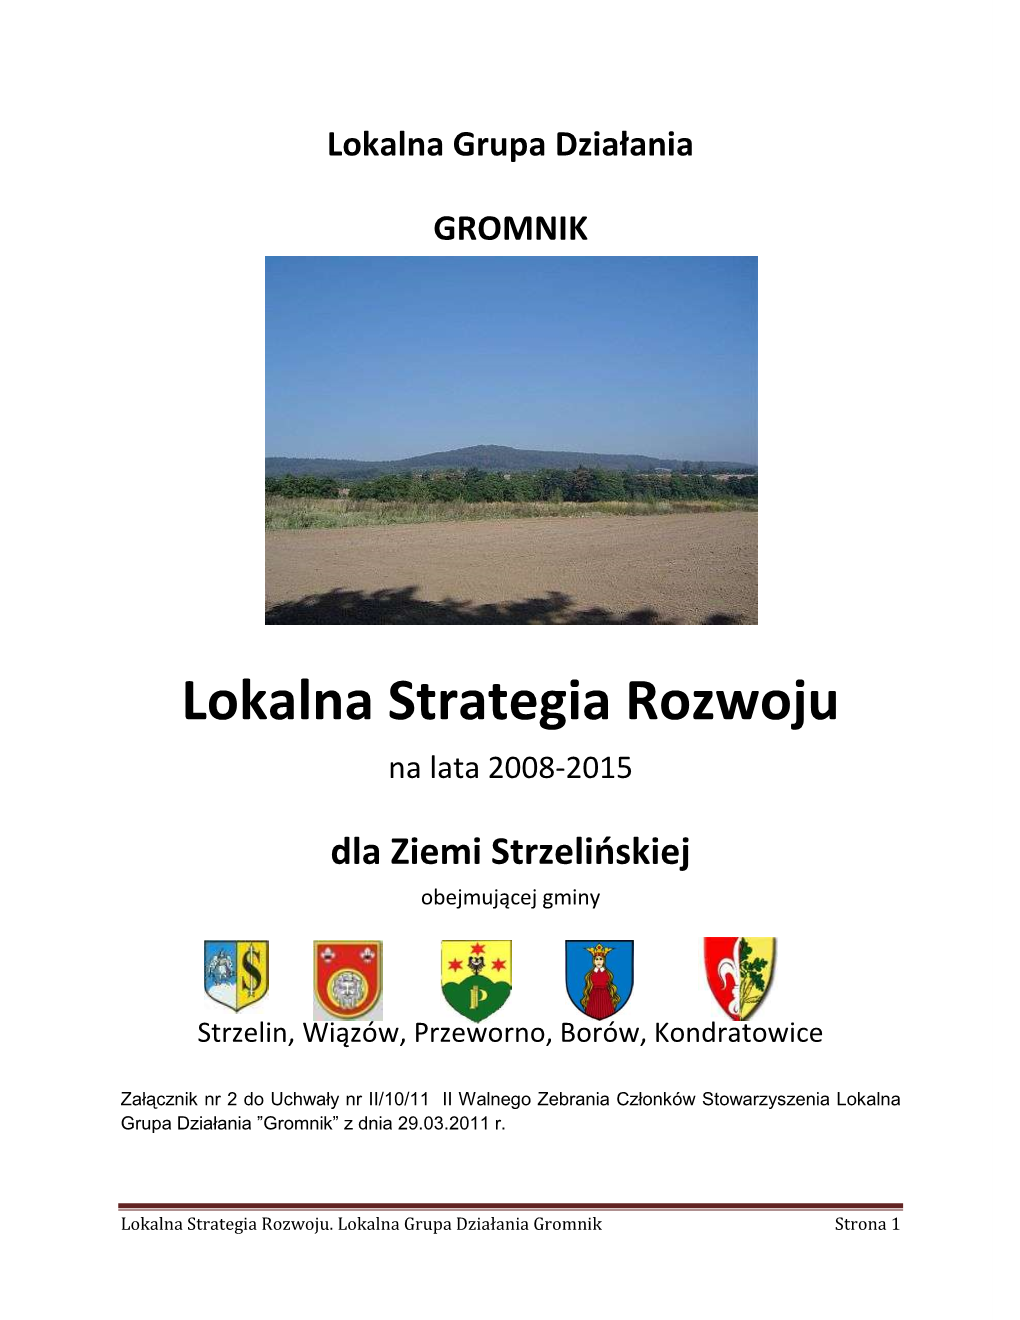 Lokalna Strategia Rozwoju Na Lata 2008-2015